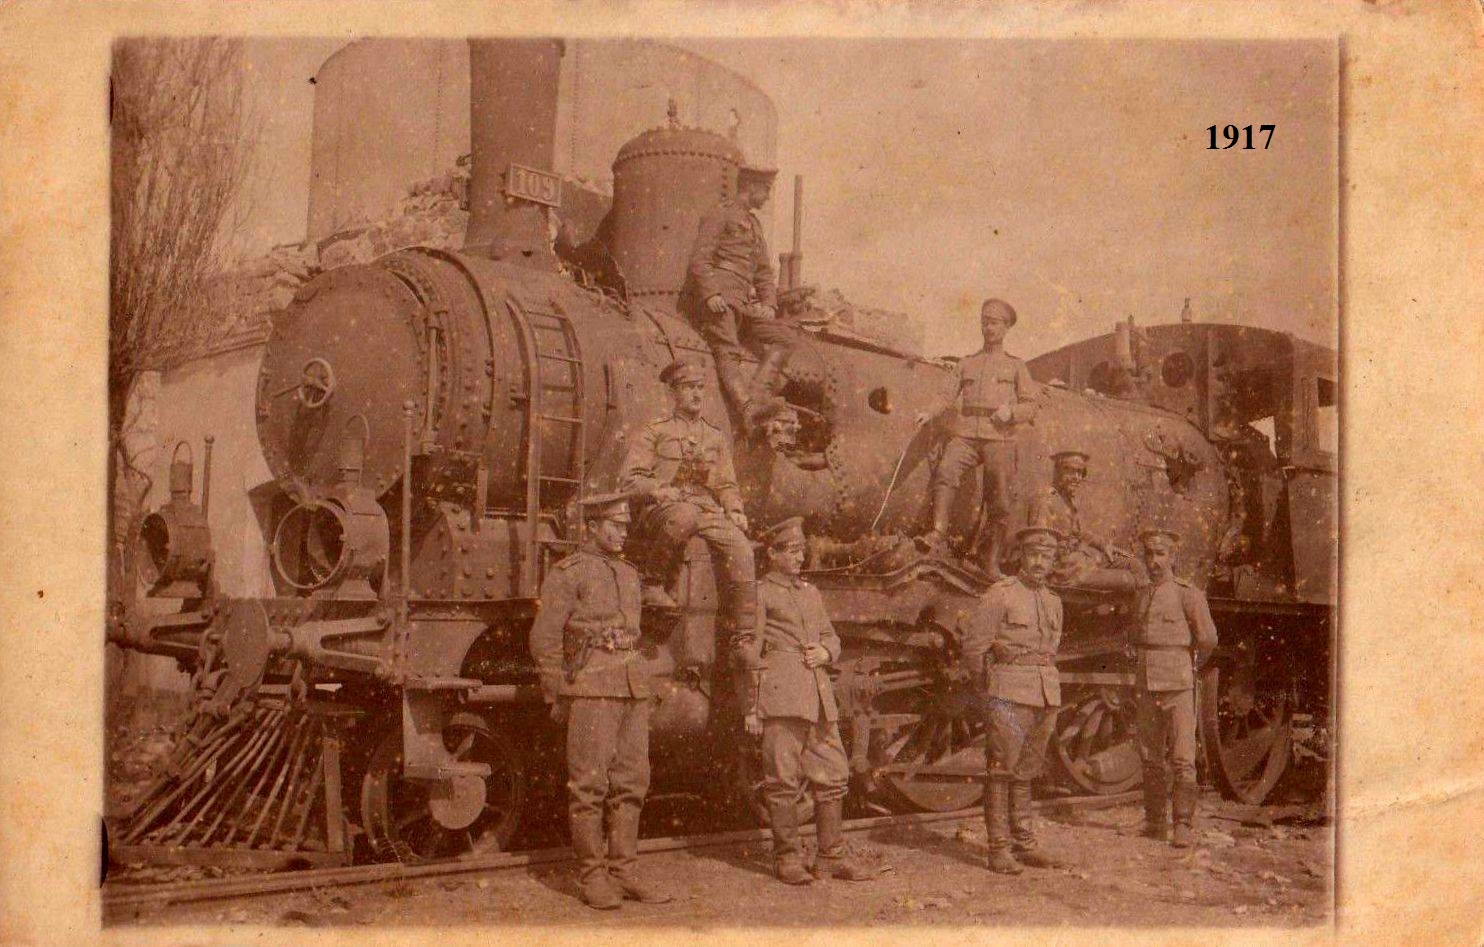 02 AL 2 Σταθμός Αλεξανδρούπ 1917 Βούλγαροι μπροστά σε διαλυμένη ατμομηχανή 